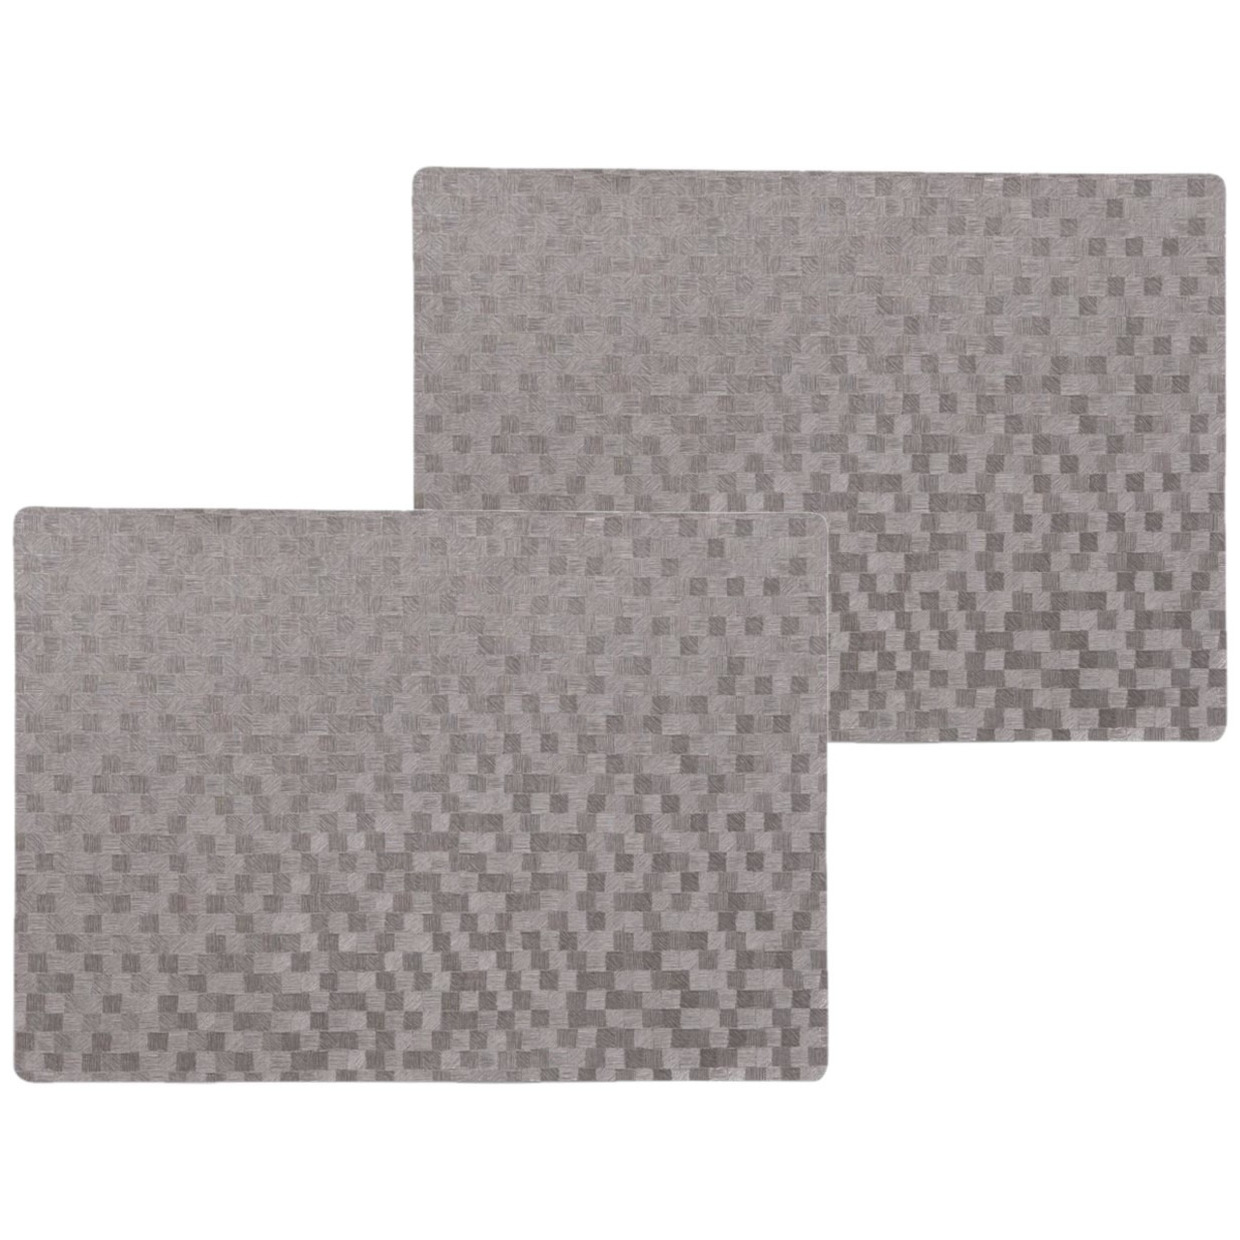 Wicotex 8x stuks stevige luxe Tafel placemats Stones grijs 30 x 43 cm -